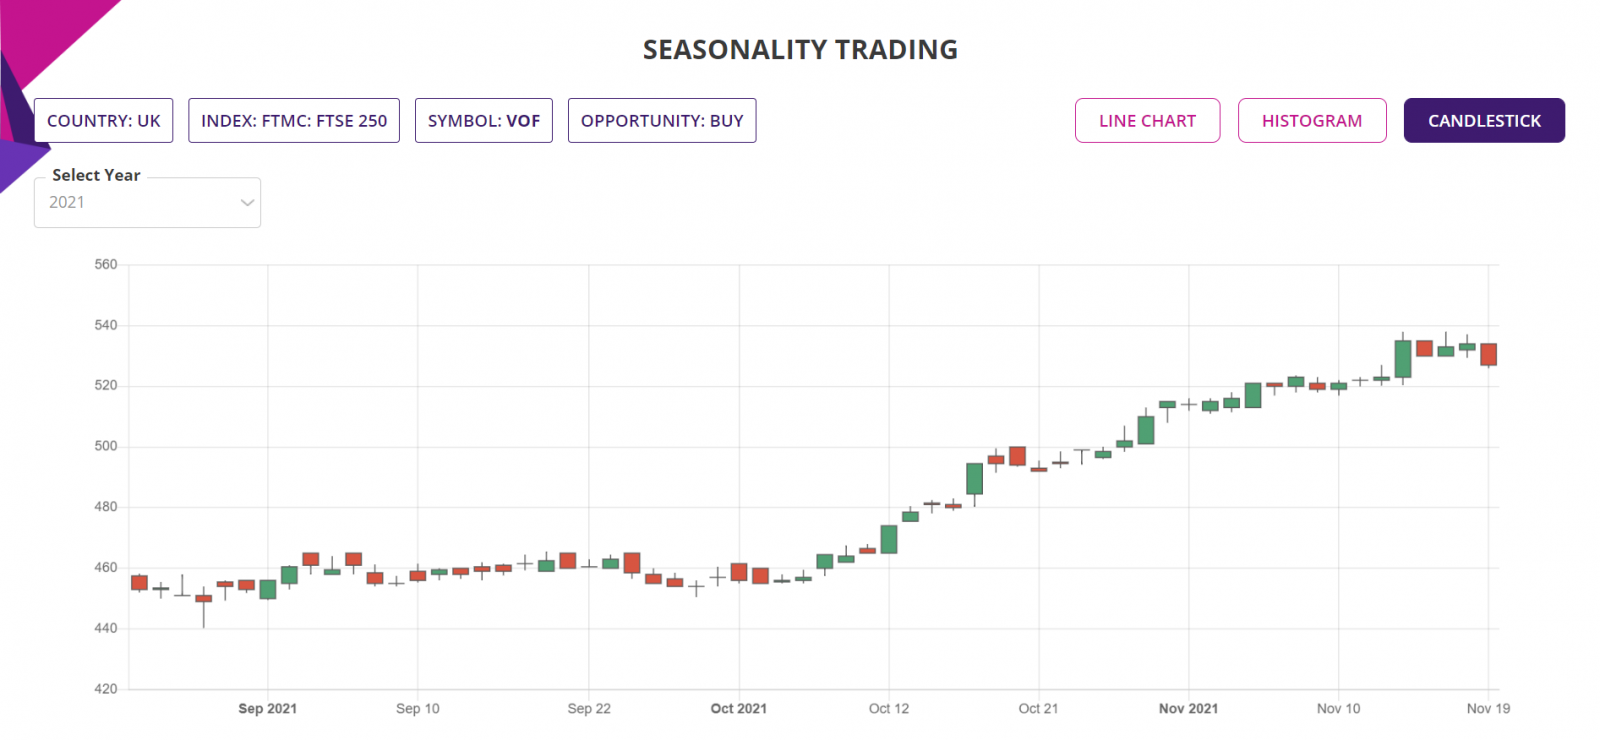 Seasonality trading strategy, detailed report charts, candlestick chart